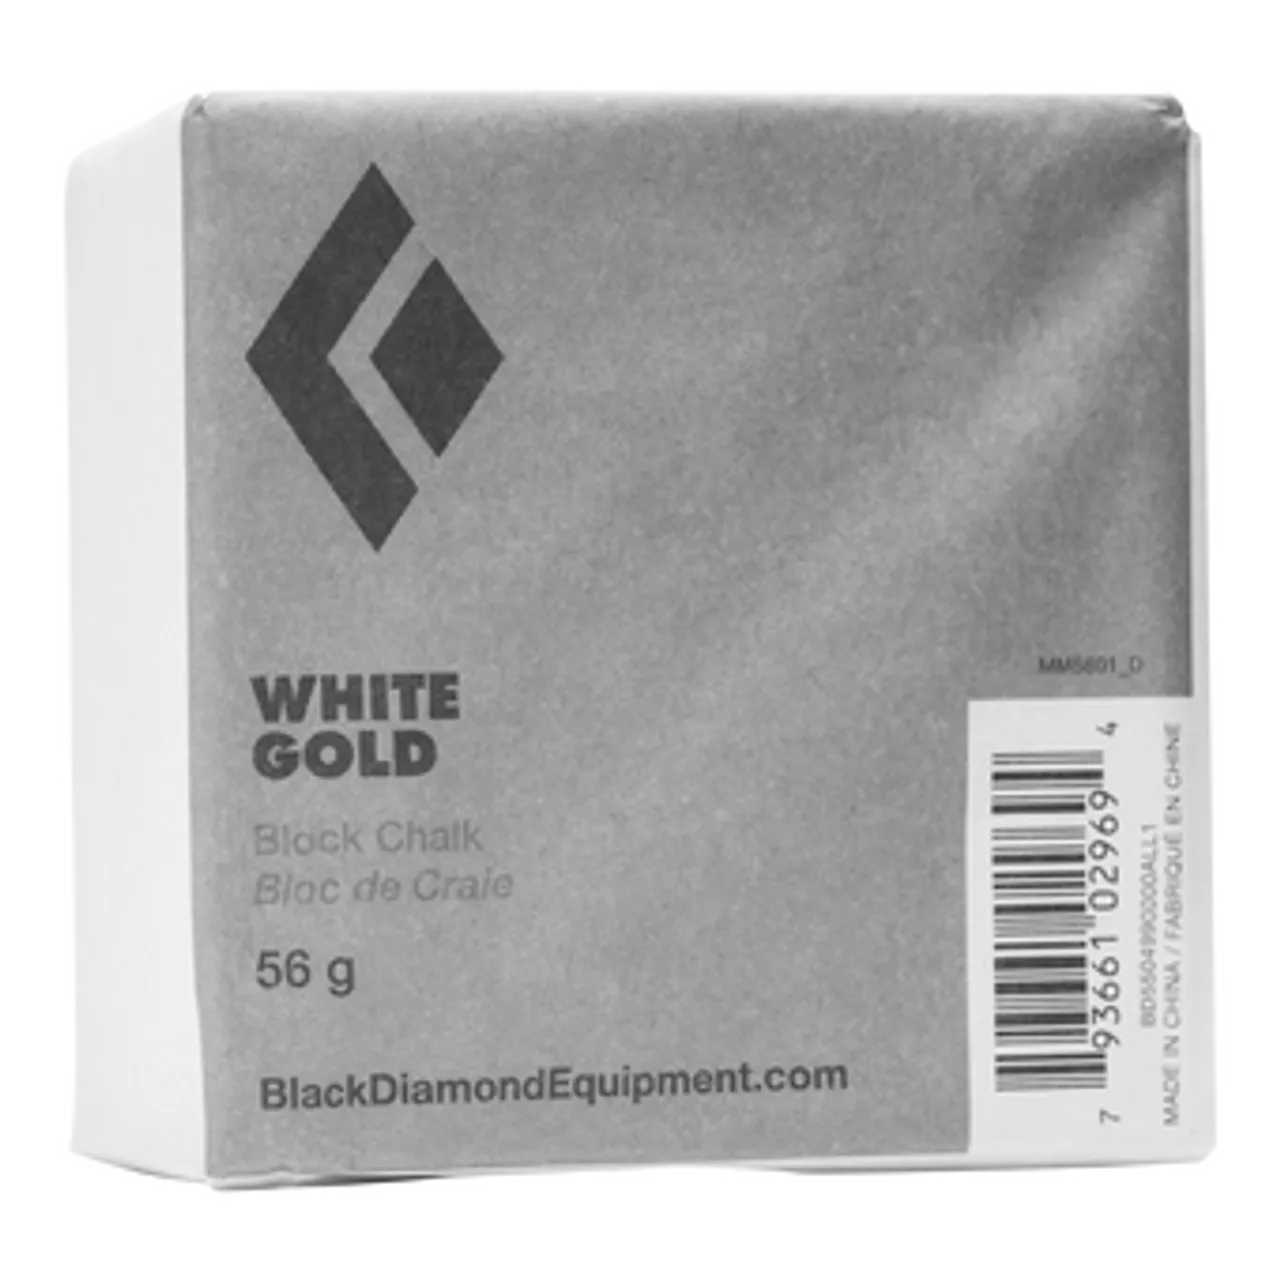 Kletterchalk Solid White Gold (56g) – Black Diamond